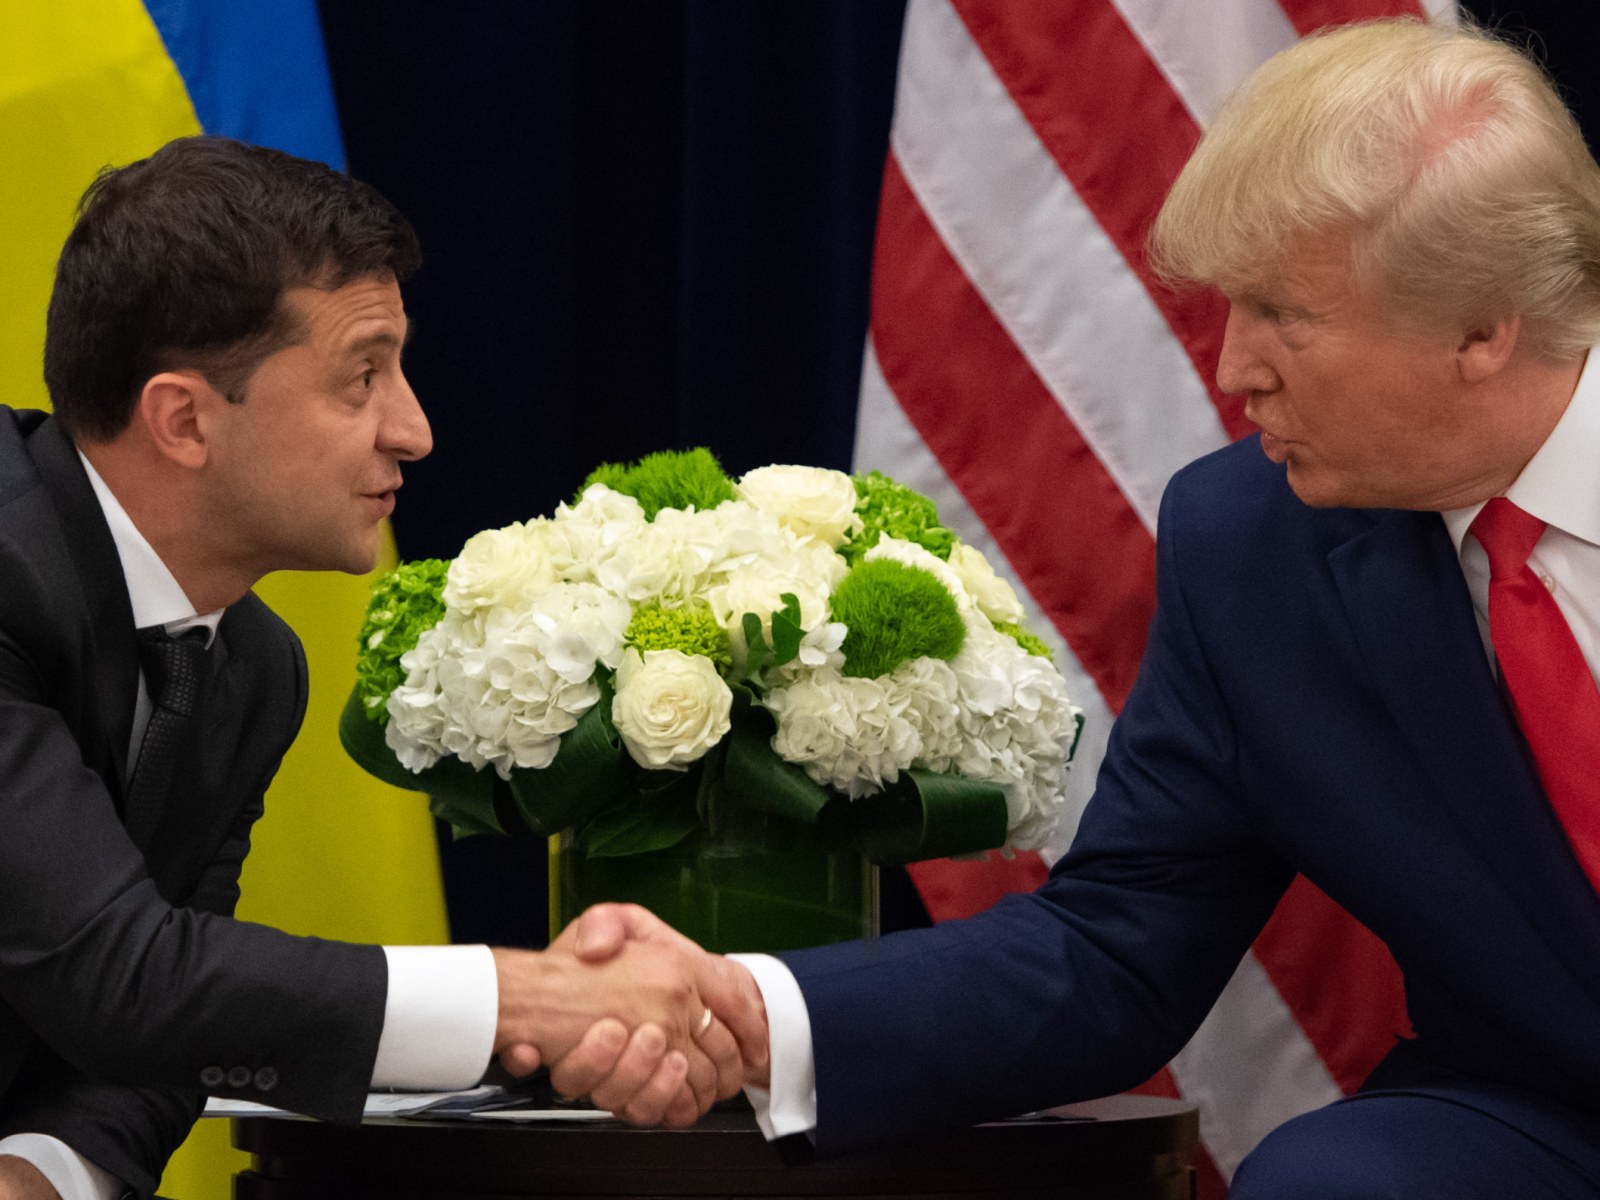 President Donald Trump and Ukrainian President Volodymyr Zelensky shake hands during a meeting in New York on September 25, 2019